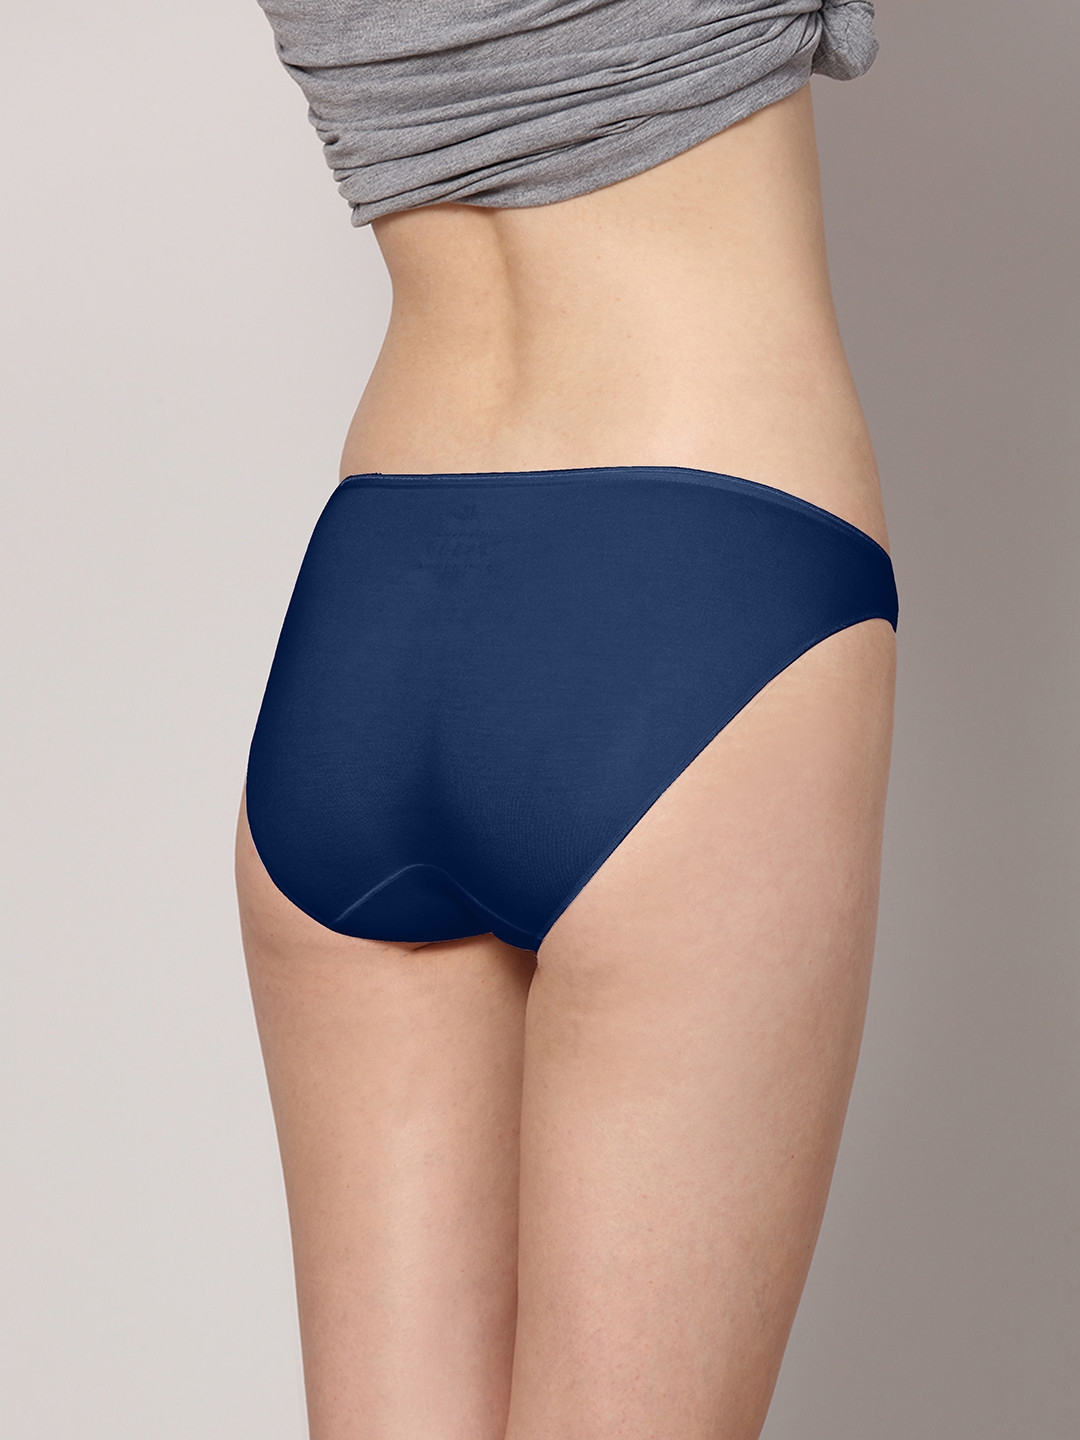 AshleyandAlvis | AshleyandAlvis Women's Panties Micro Modal, Anti Bacterial, Skinny Soft, Premium Bikini-No Itching, Sweat Proof, Double In-seam Gusset 4